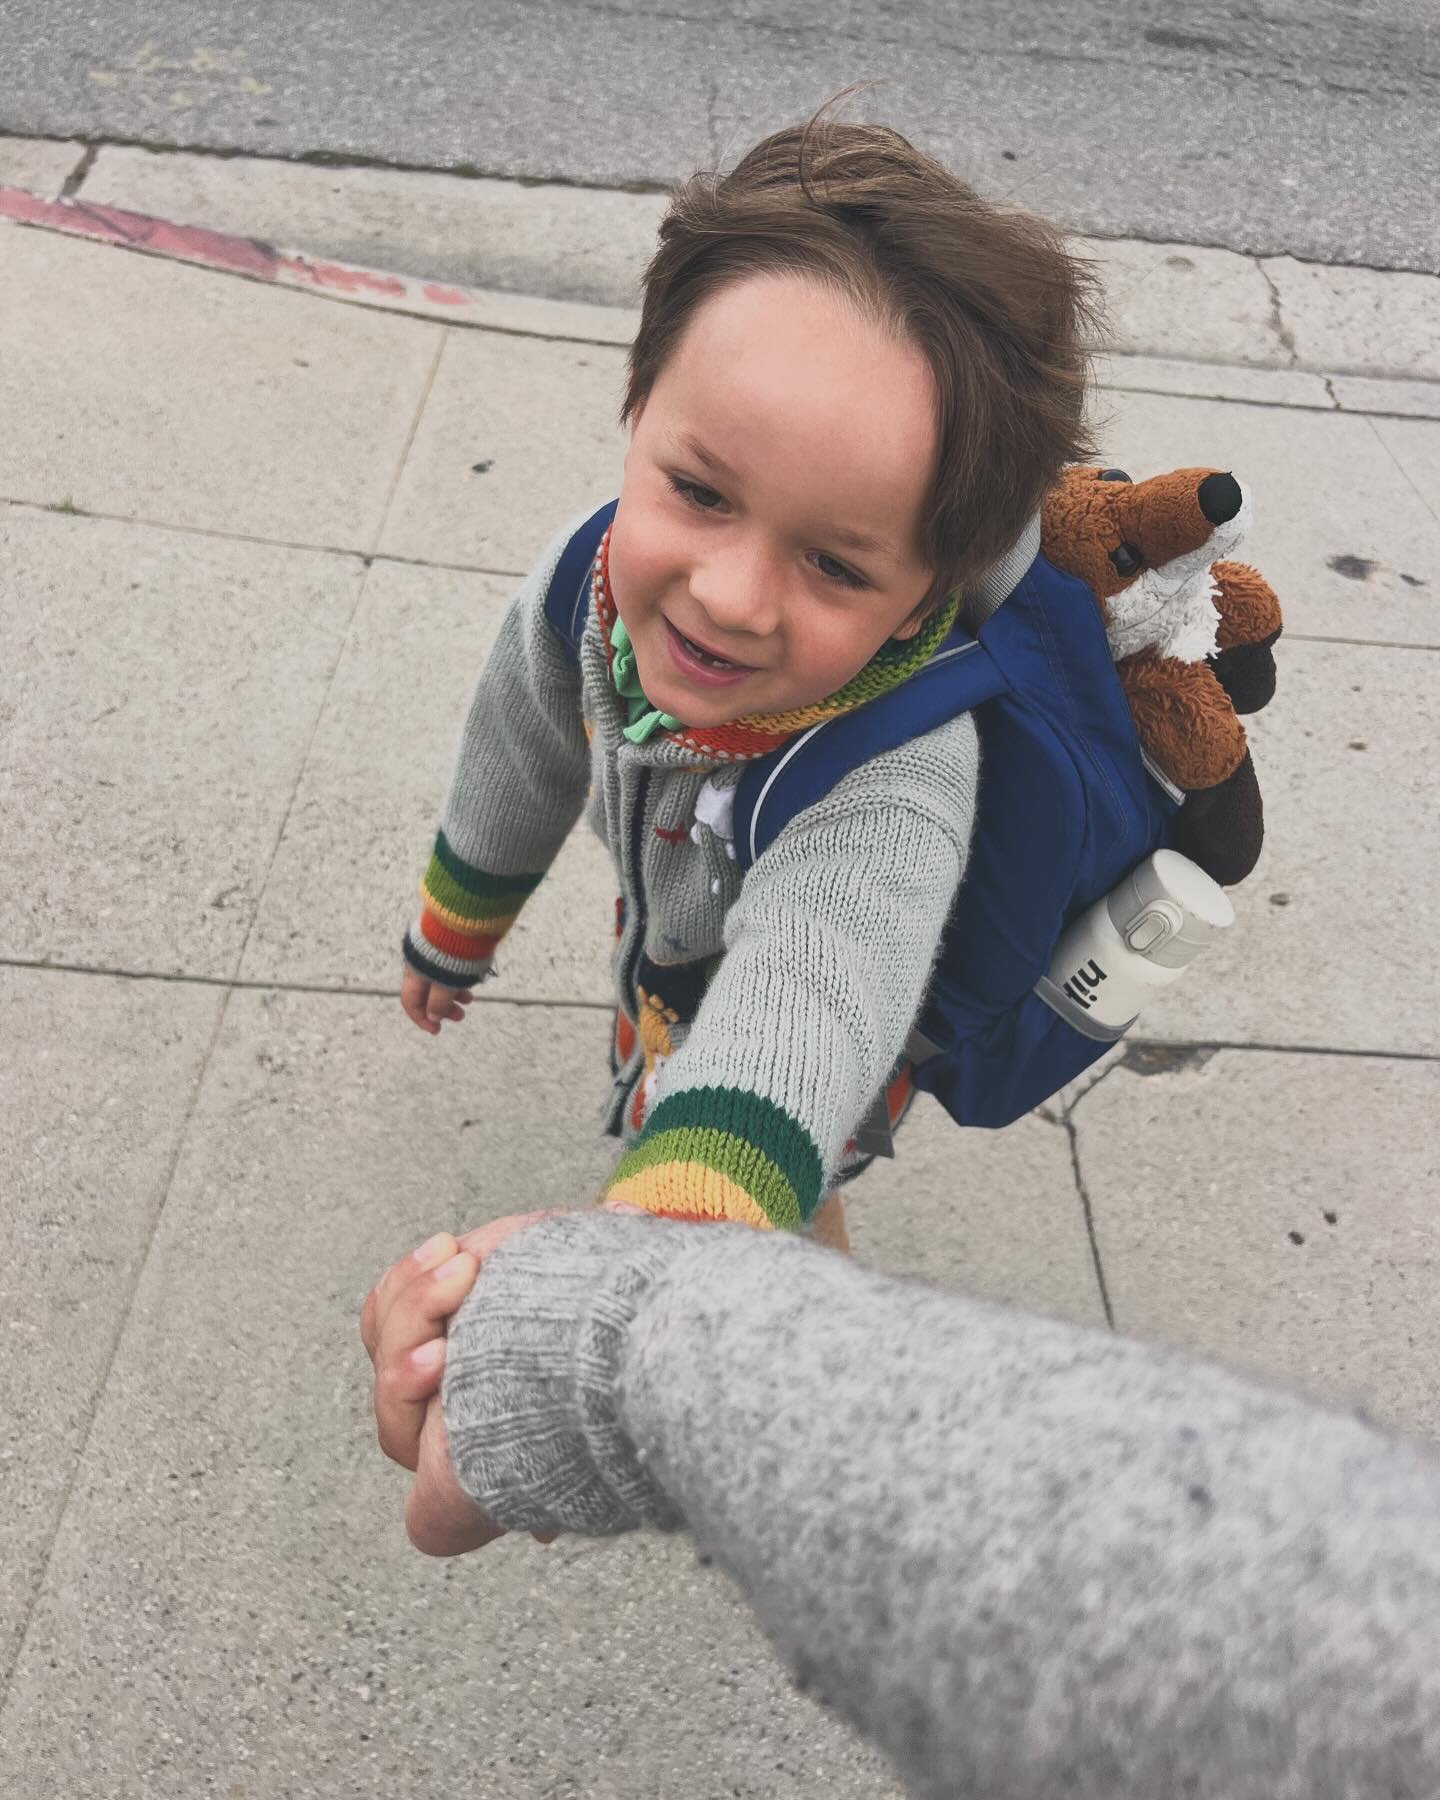 I love taking my nephew to school and I especially love that he runs back to give me a hug!

@vikavickyvictoria 

#nephew #niko #auntielife #family #love